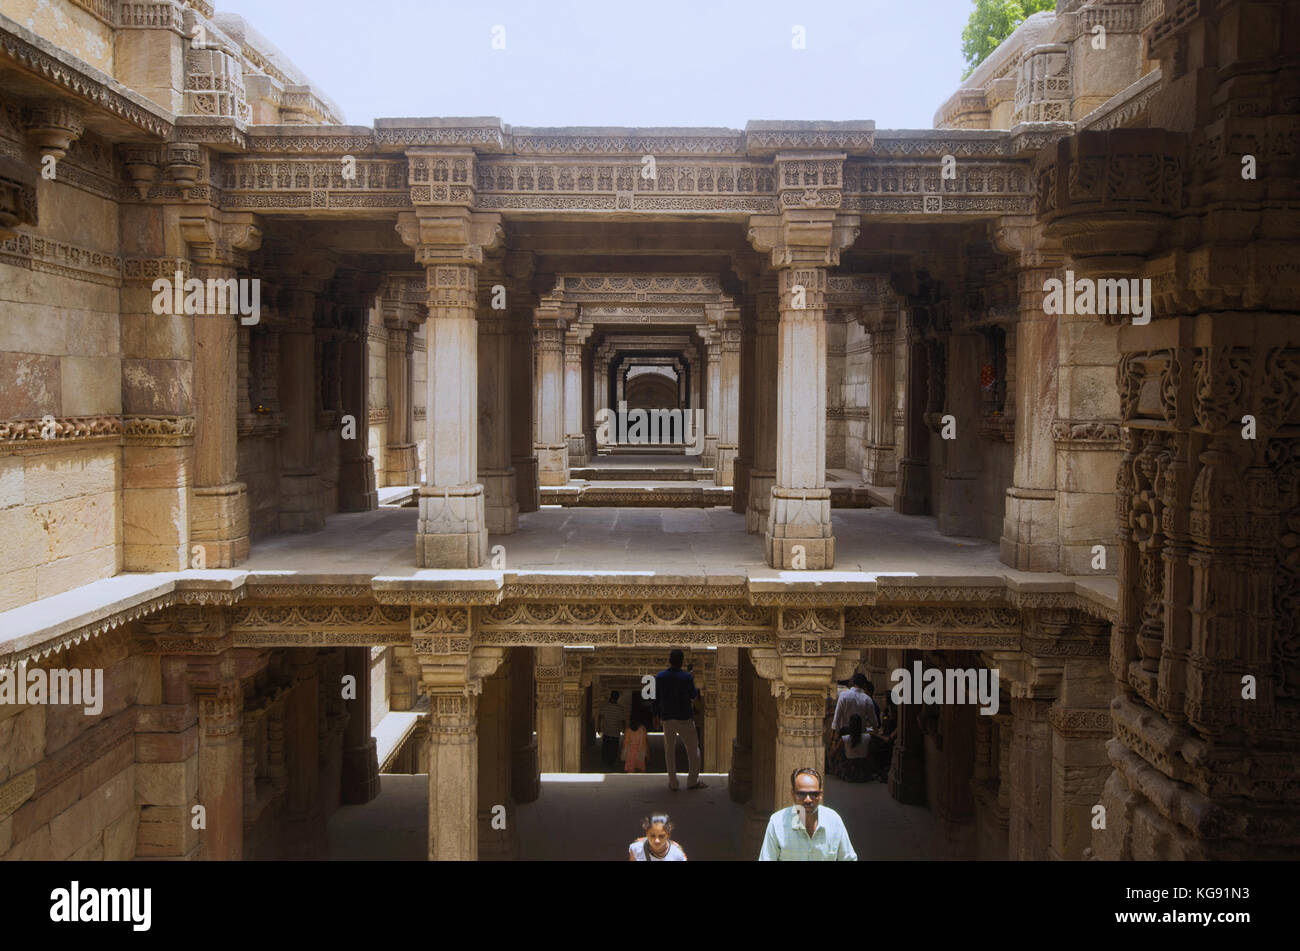 Die innere Sicht der Adalaj Ni Vav (Stepwell) oder Rudabai Stepwell. Im Jahre 1498 fünf Stockwerke tief gebaut. Ahmedabad, Gujarat, Indien. Stockfoto